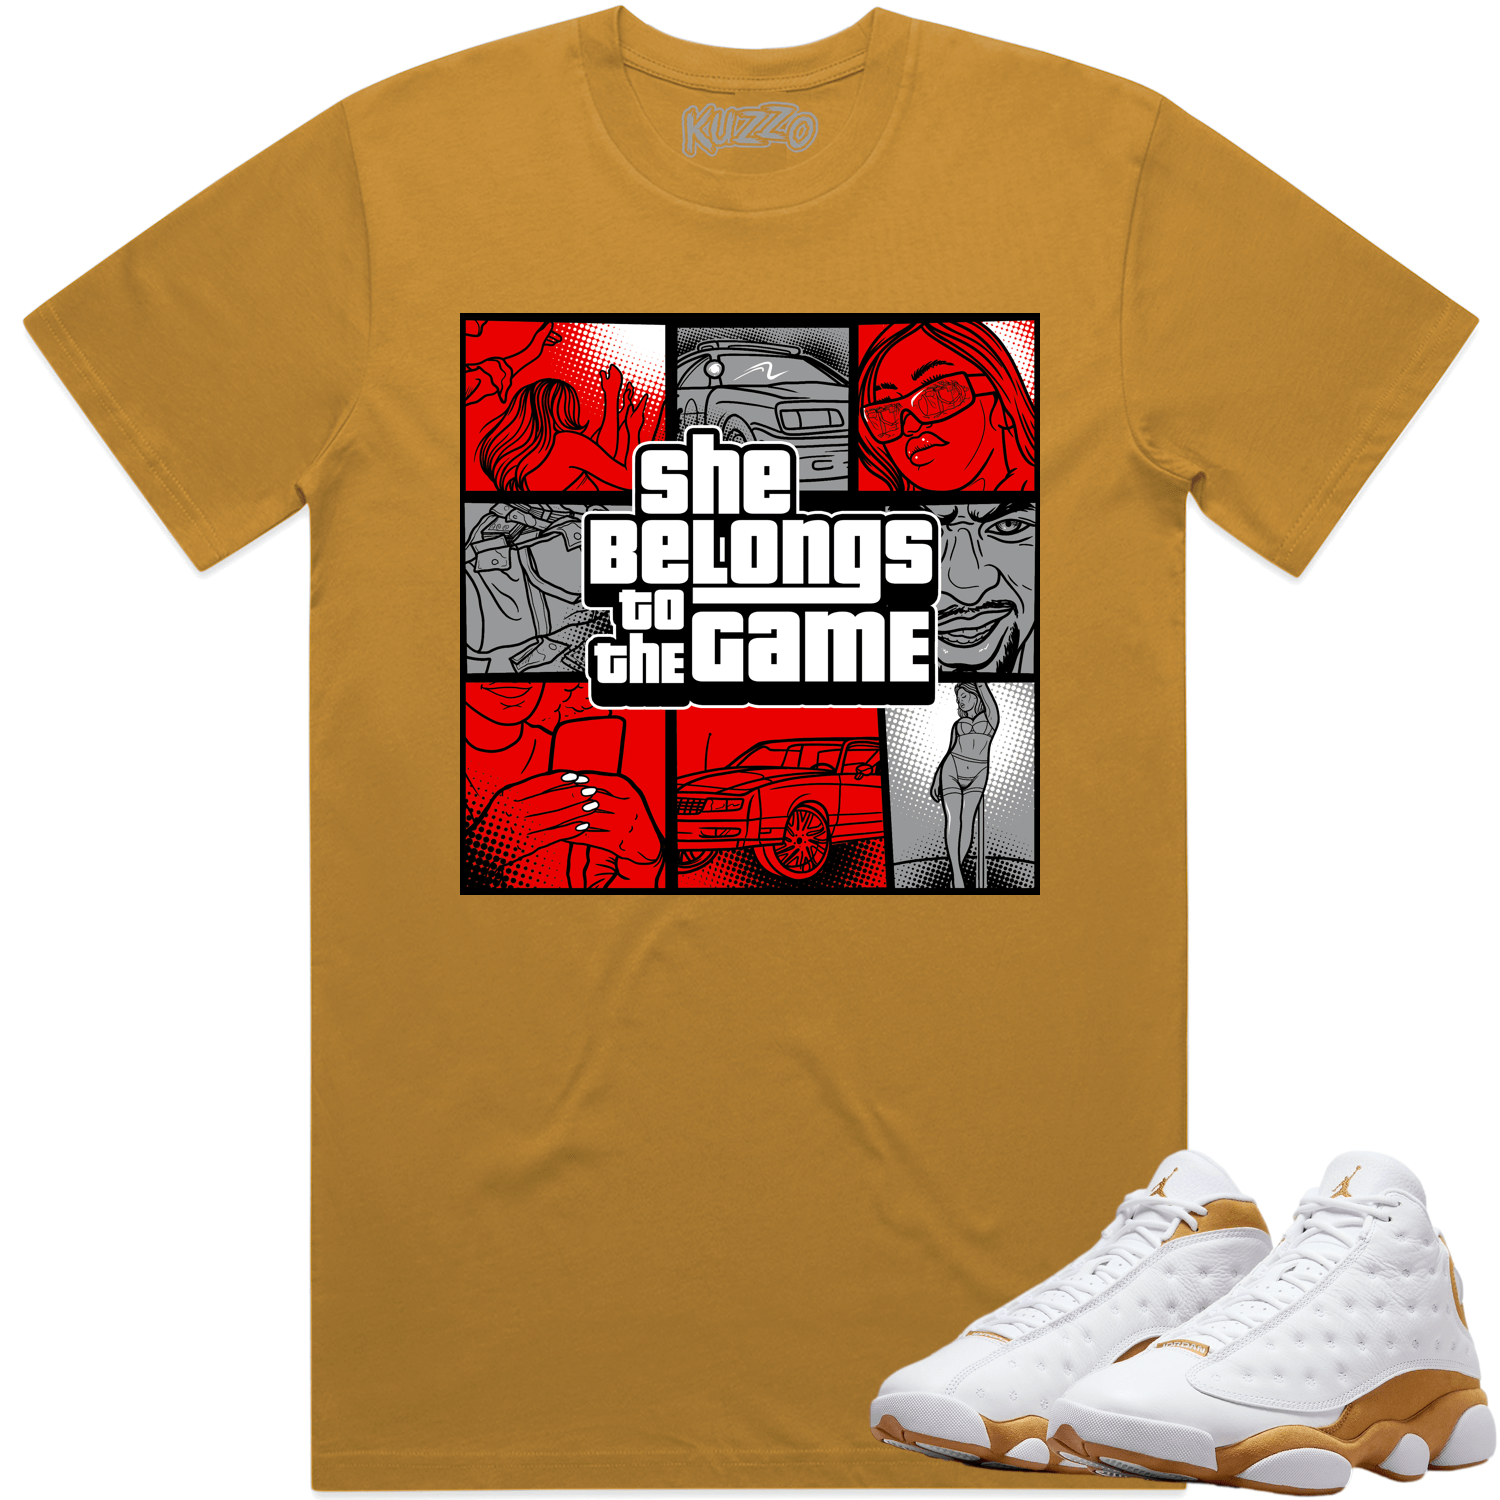 Wheat 13s Shirt - Jordan 13 Wheat Shirts - Red Game